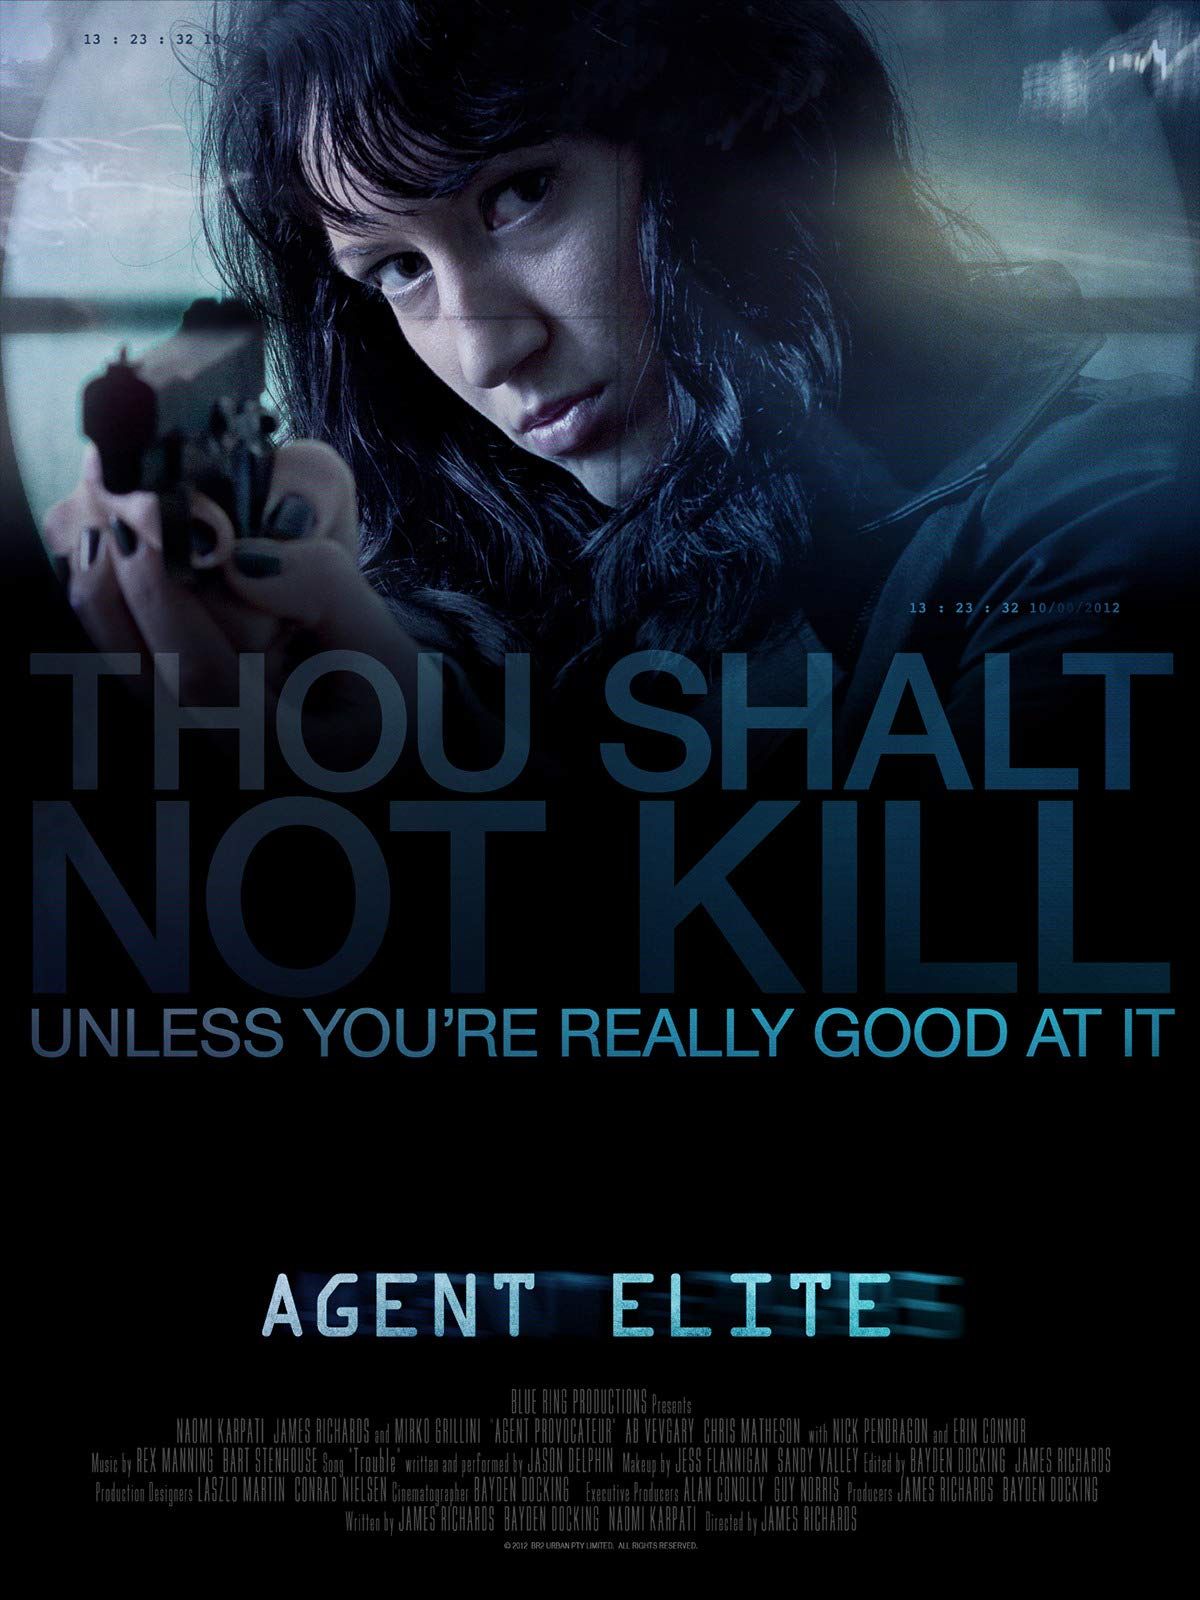 Agent Elite (2012) Hindi Dubbed HDRip download full movie